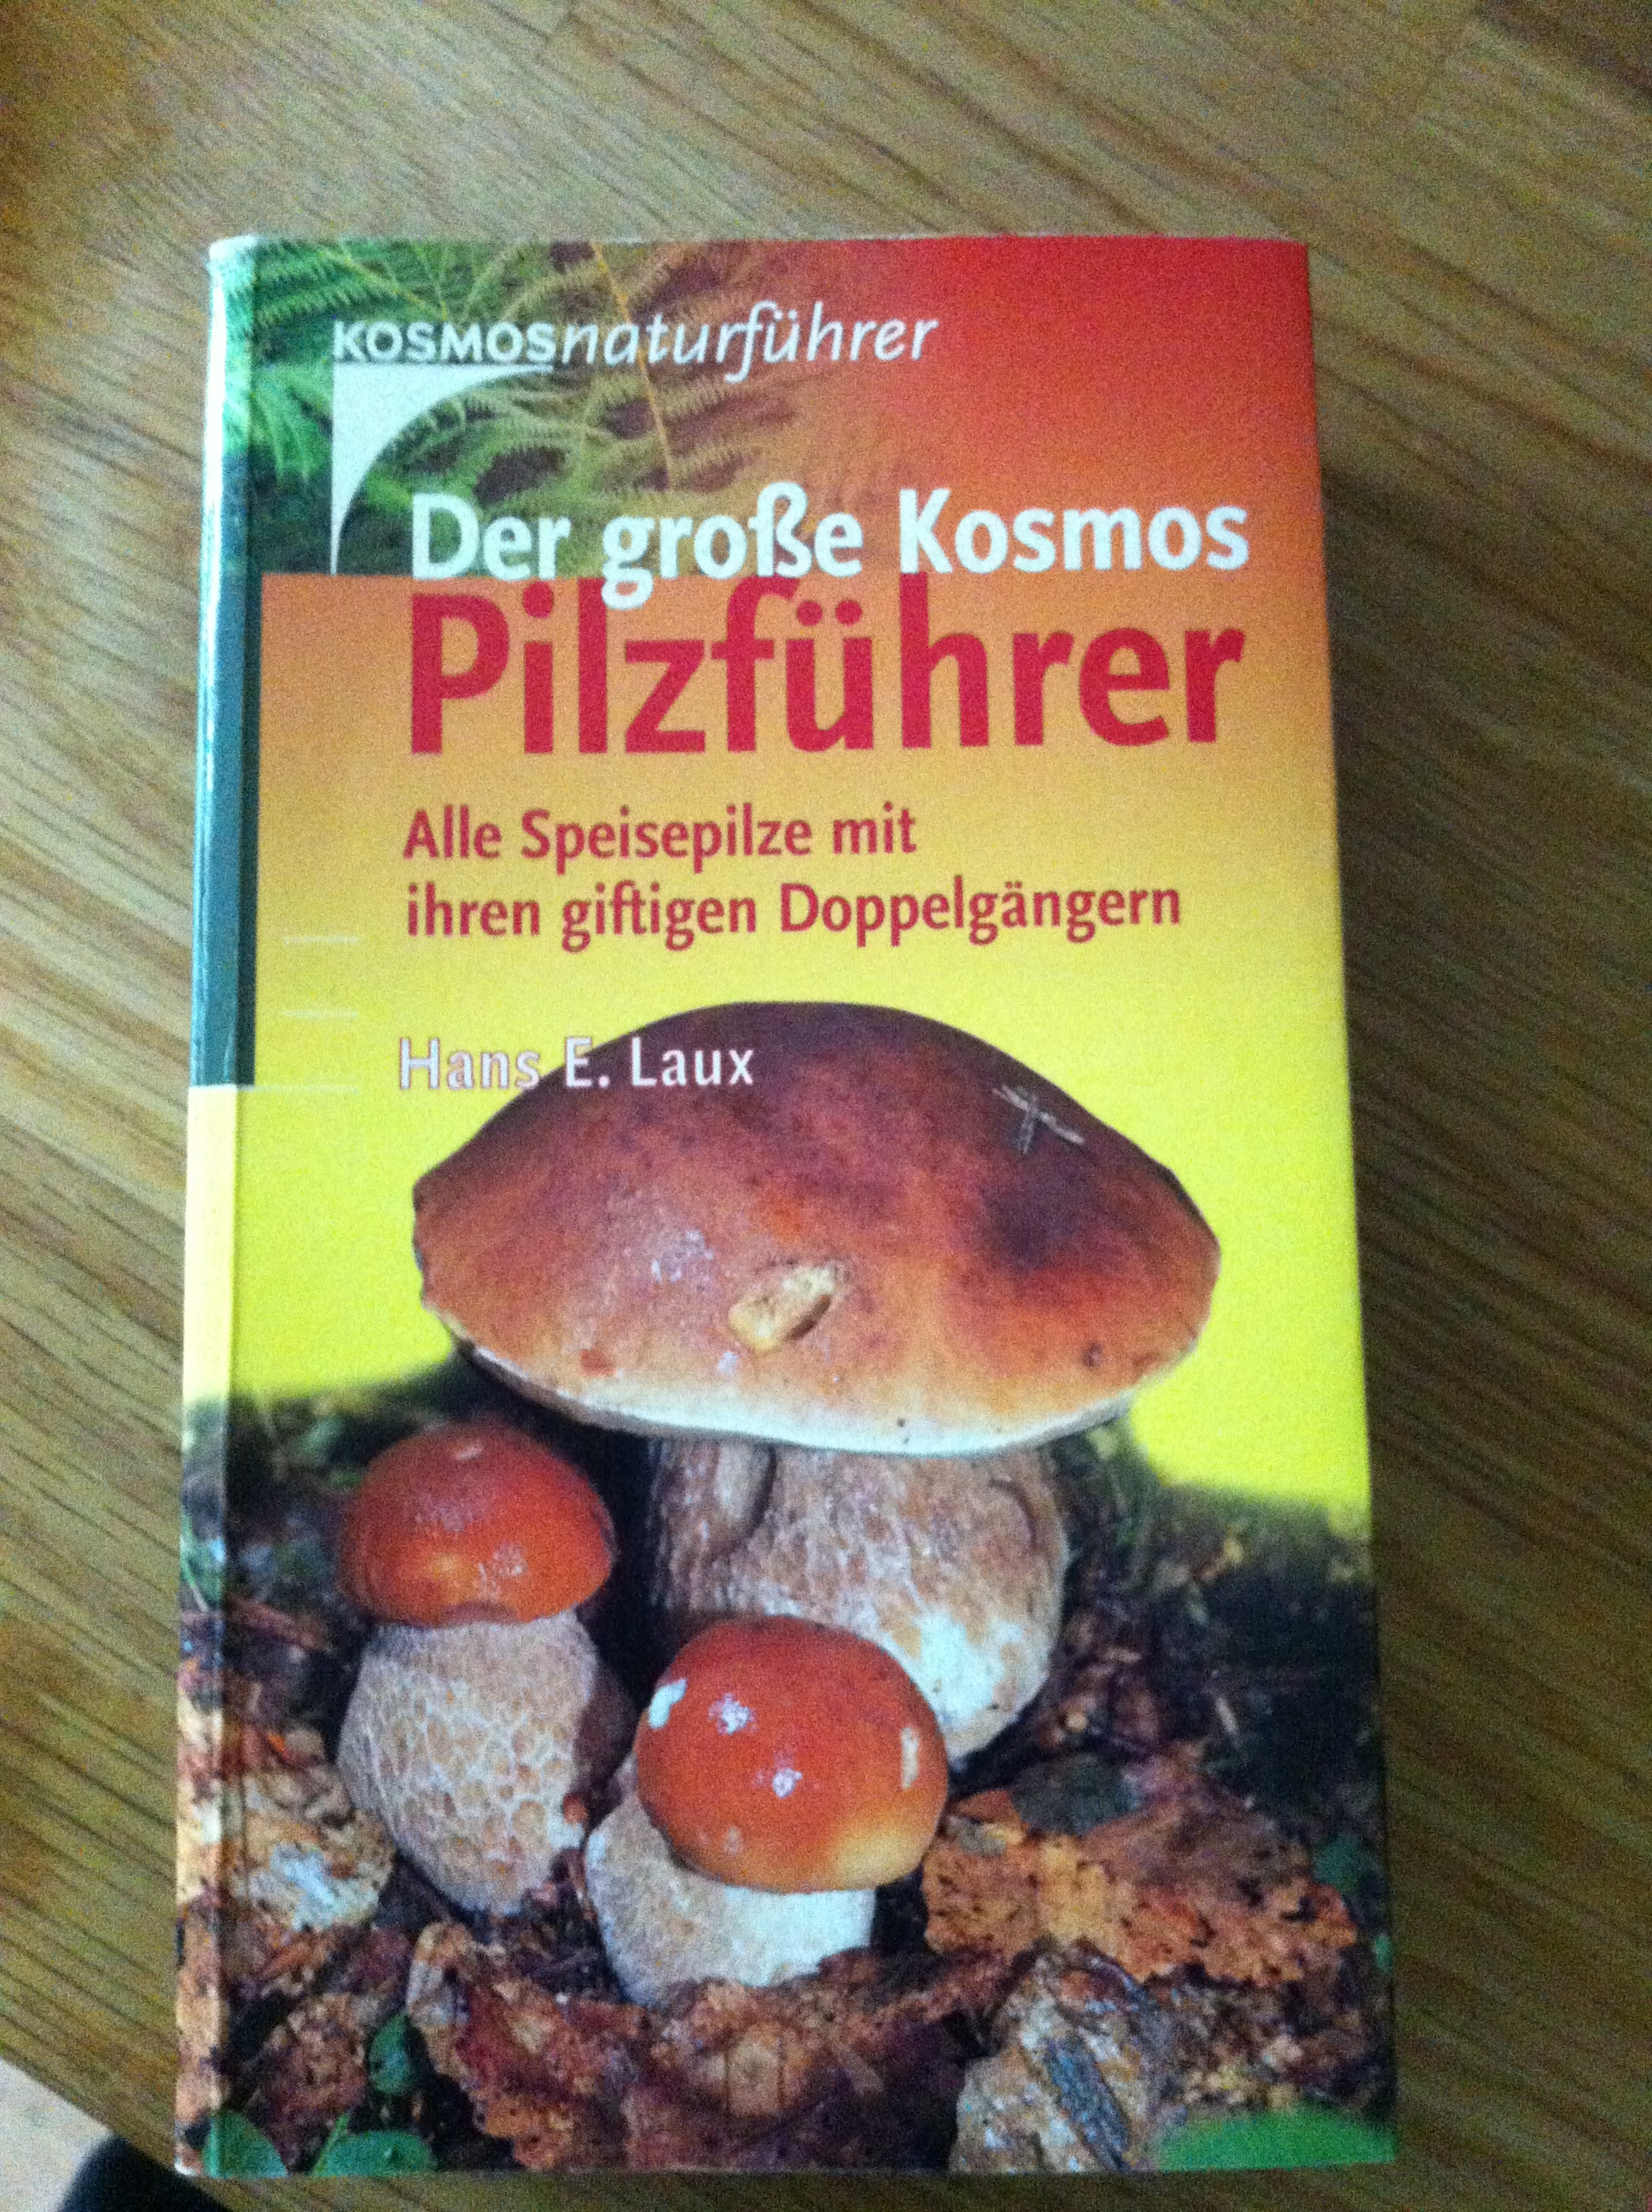 Unser Pilzführer vom KOSMOS Verlag